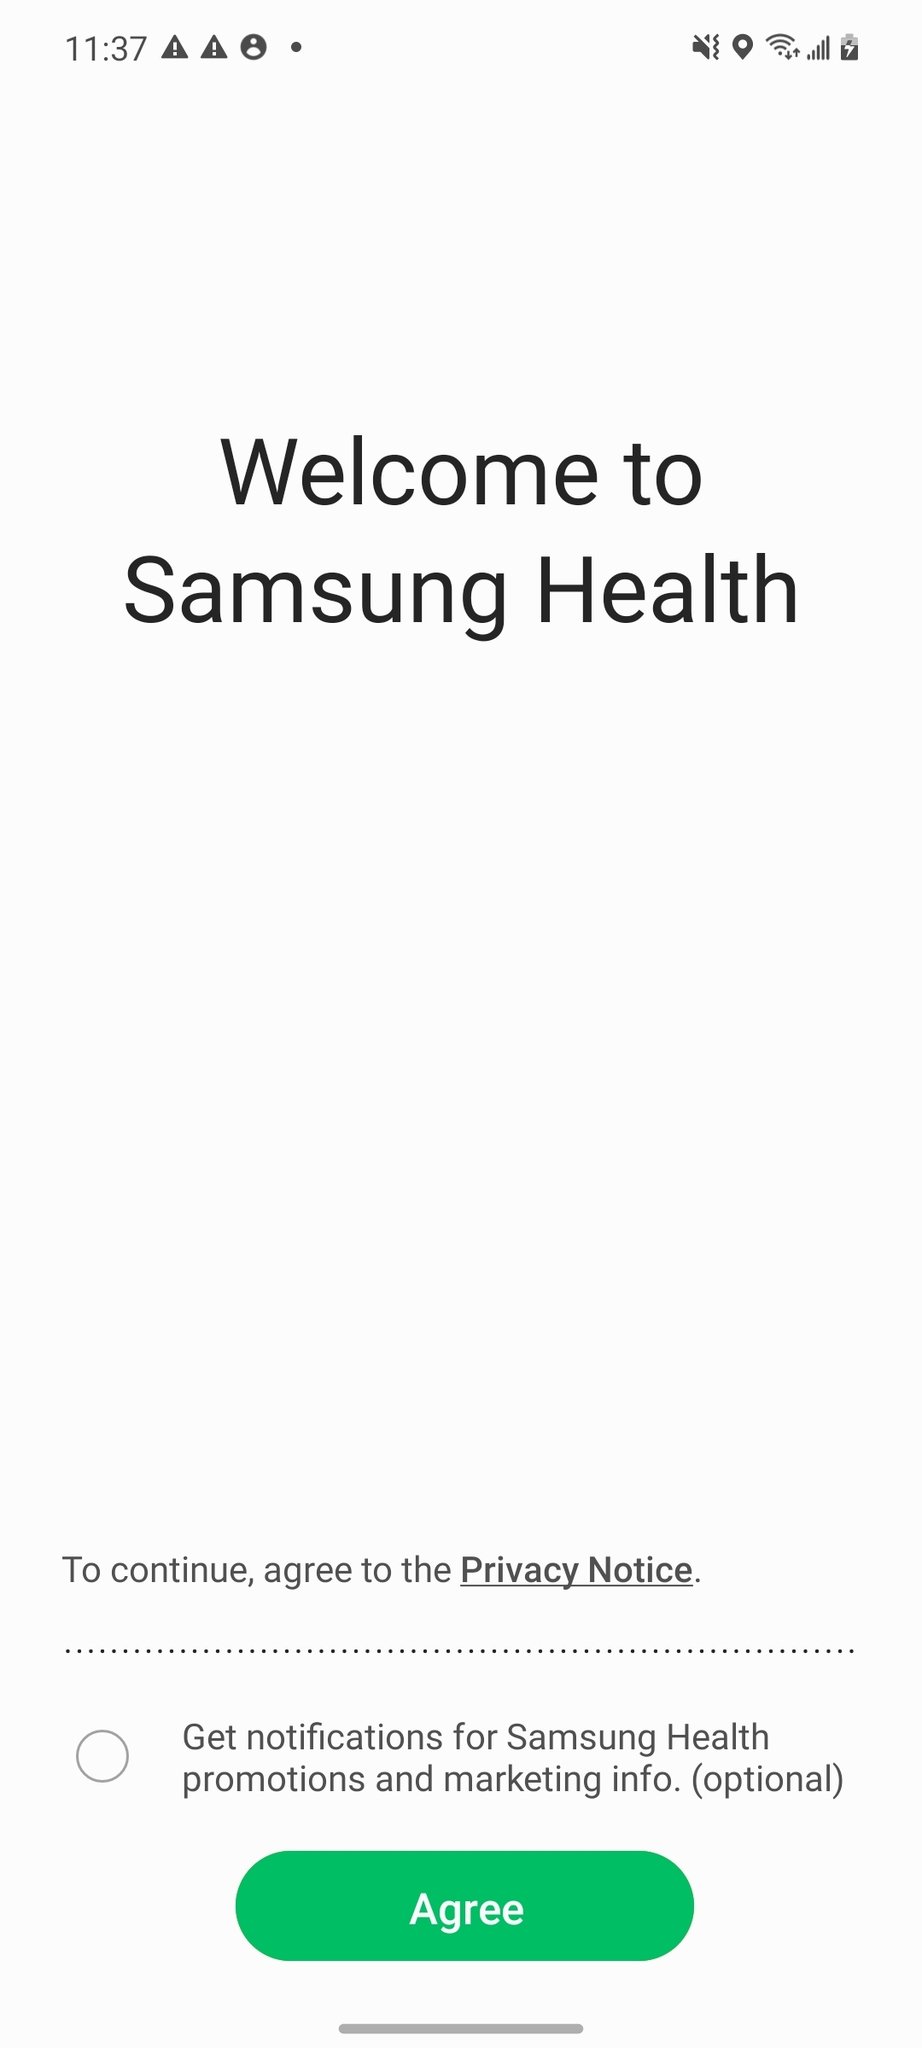 Samsung Health Setup Screenshot 2022